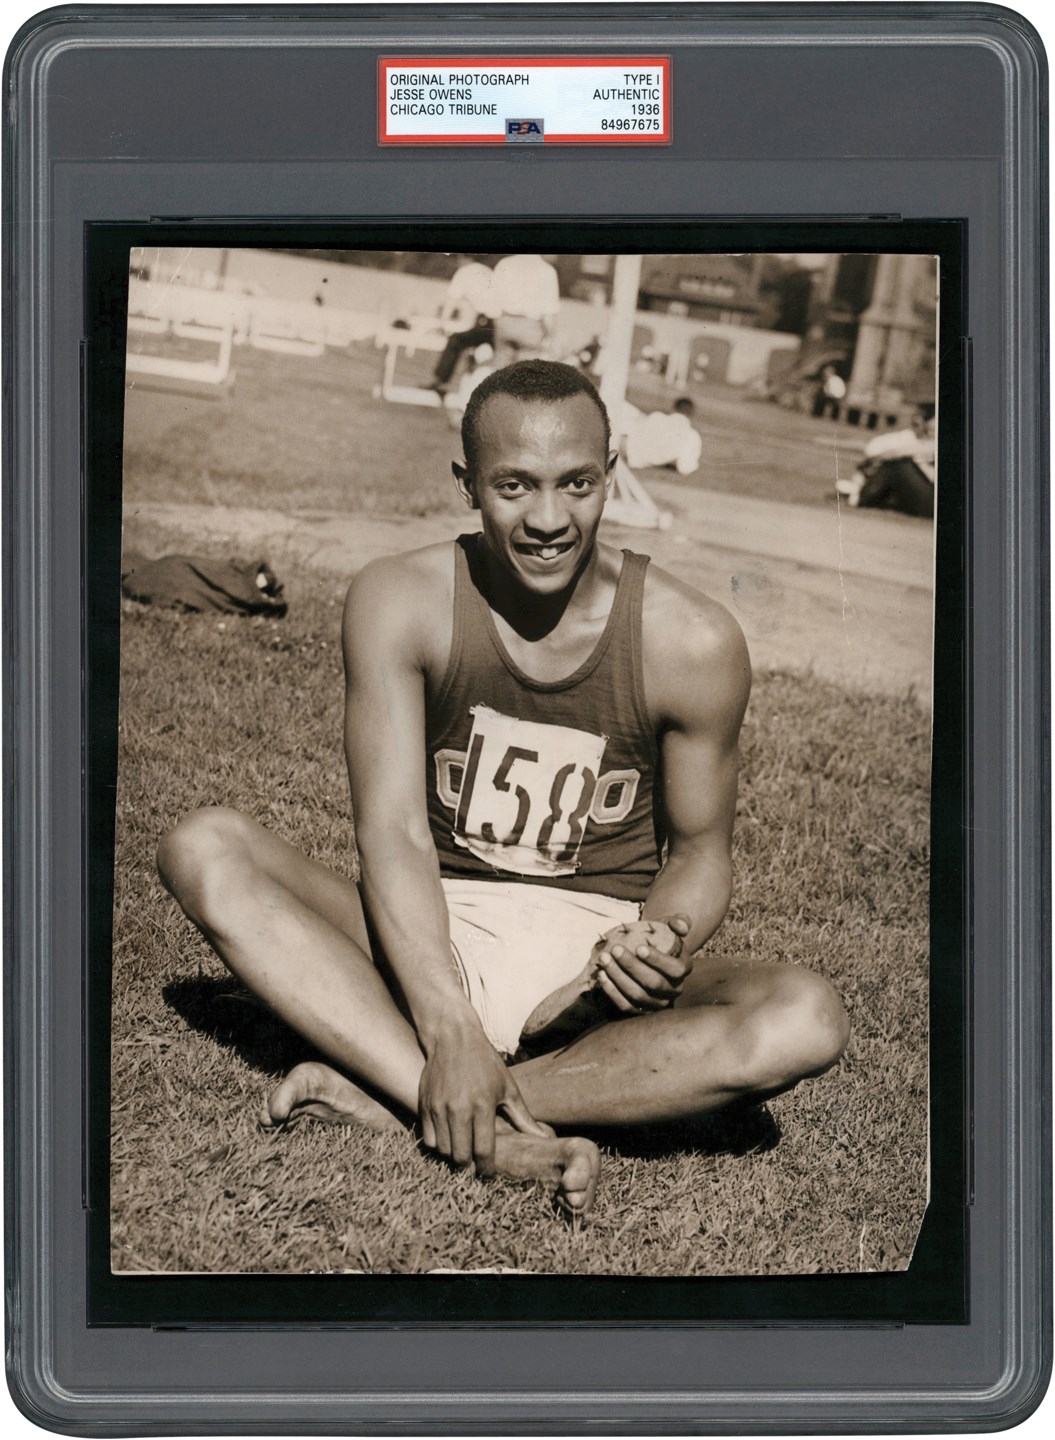 - Circa 1936 Jesse Owens Photograph - Gold Medal Olympic Era (PSA Type I)